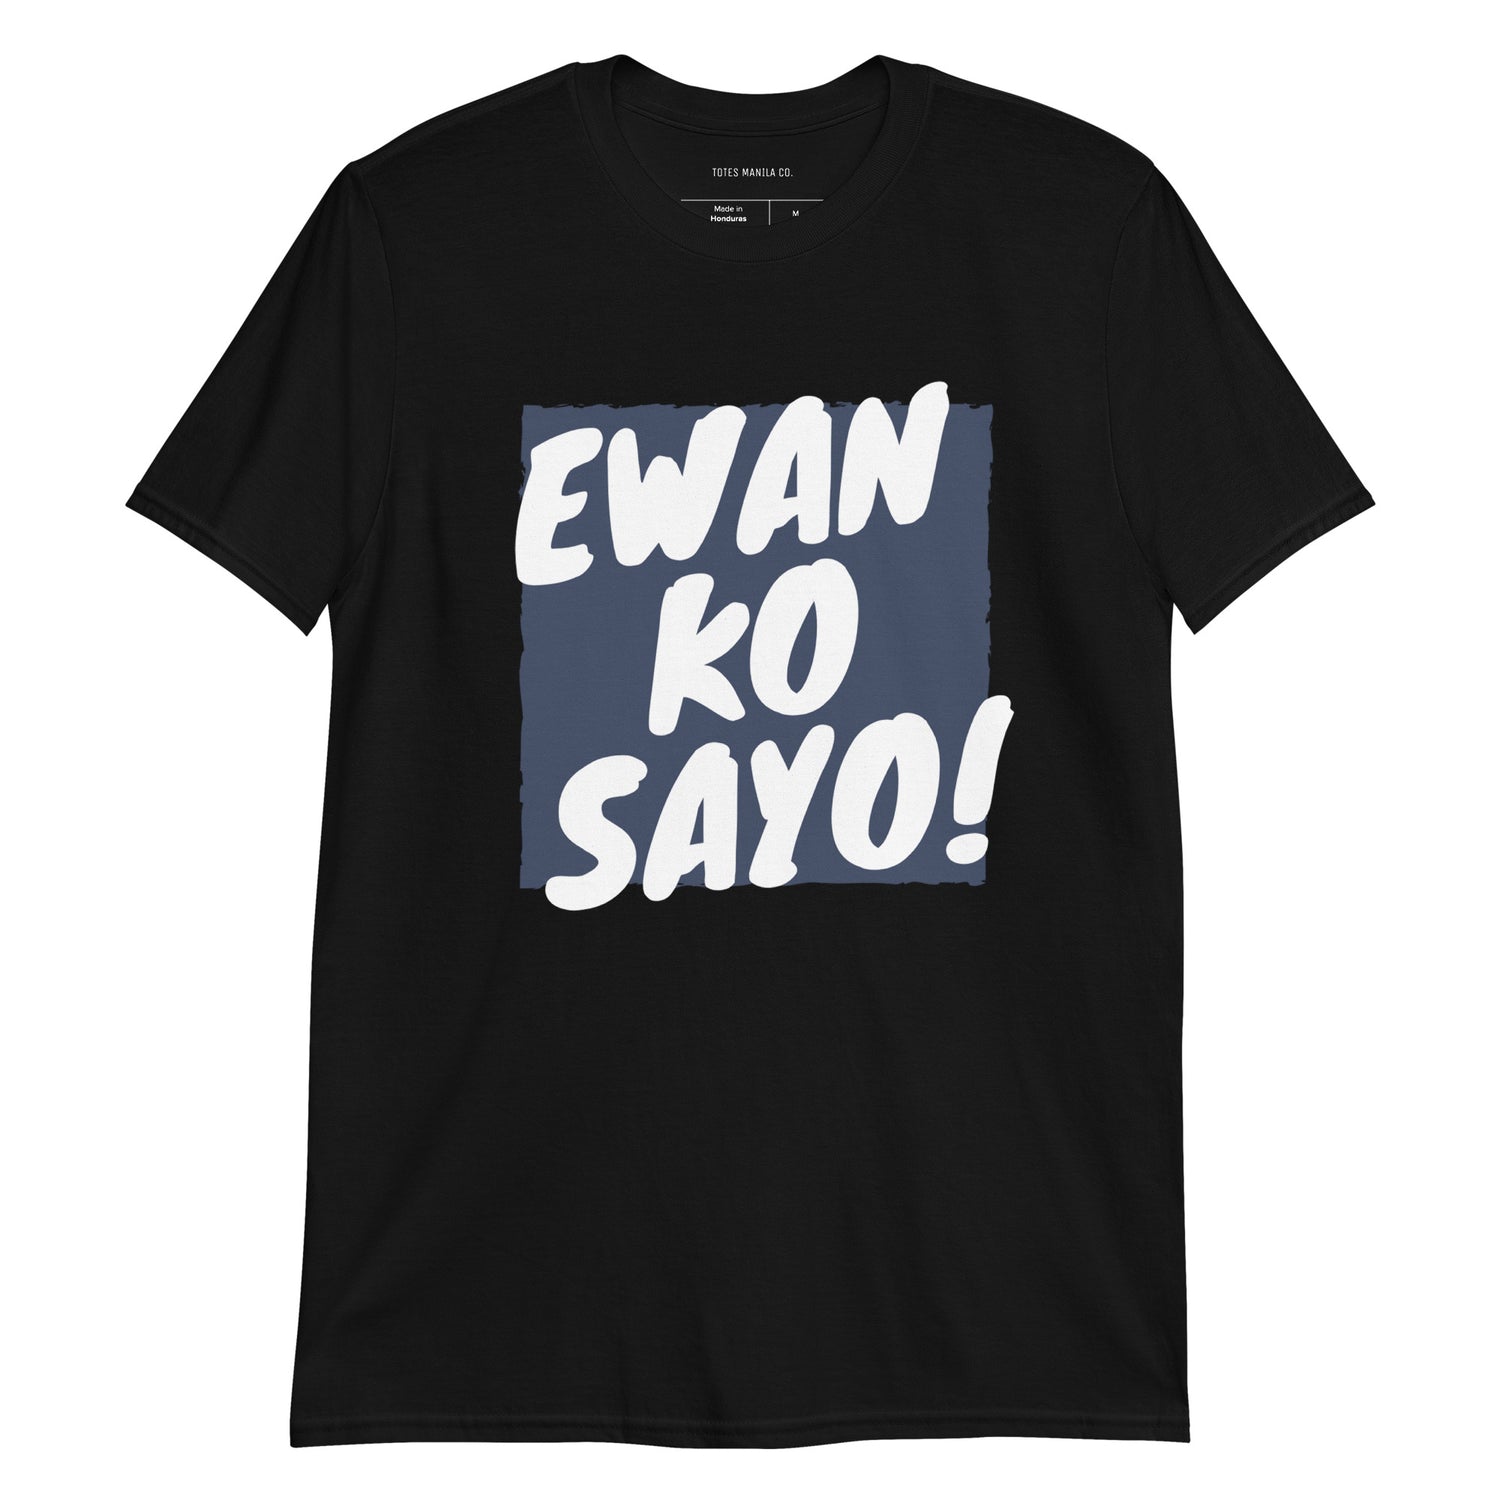 Filipino Shirt Ewan Ko Sayo! Funny Merch in color variant Black